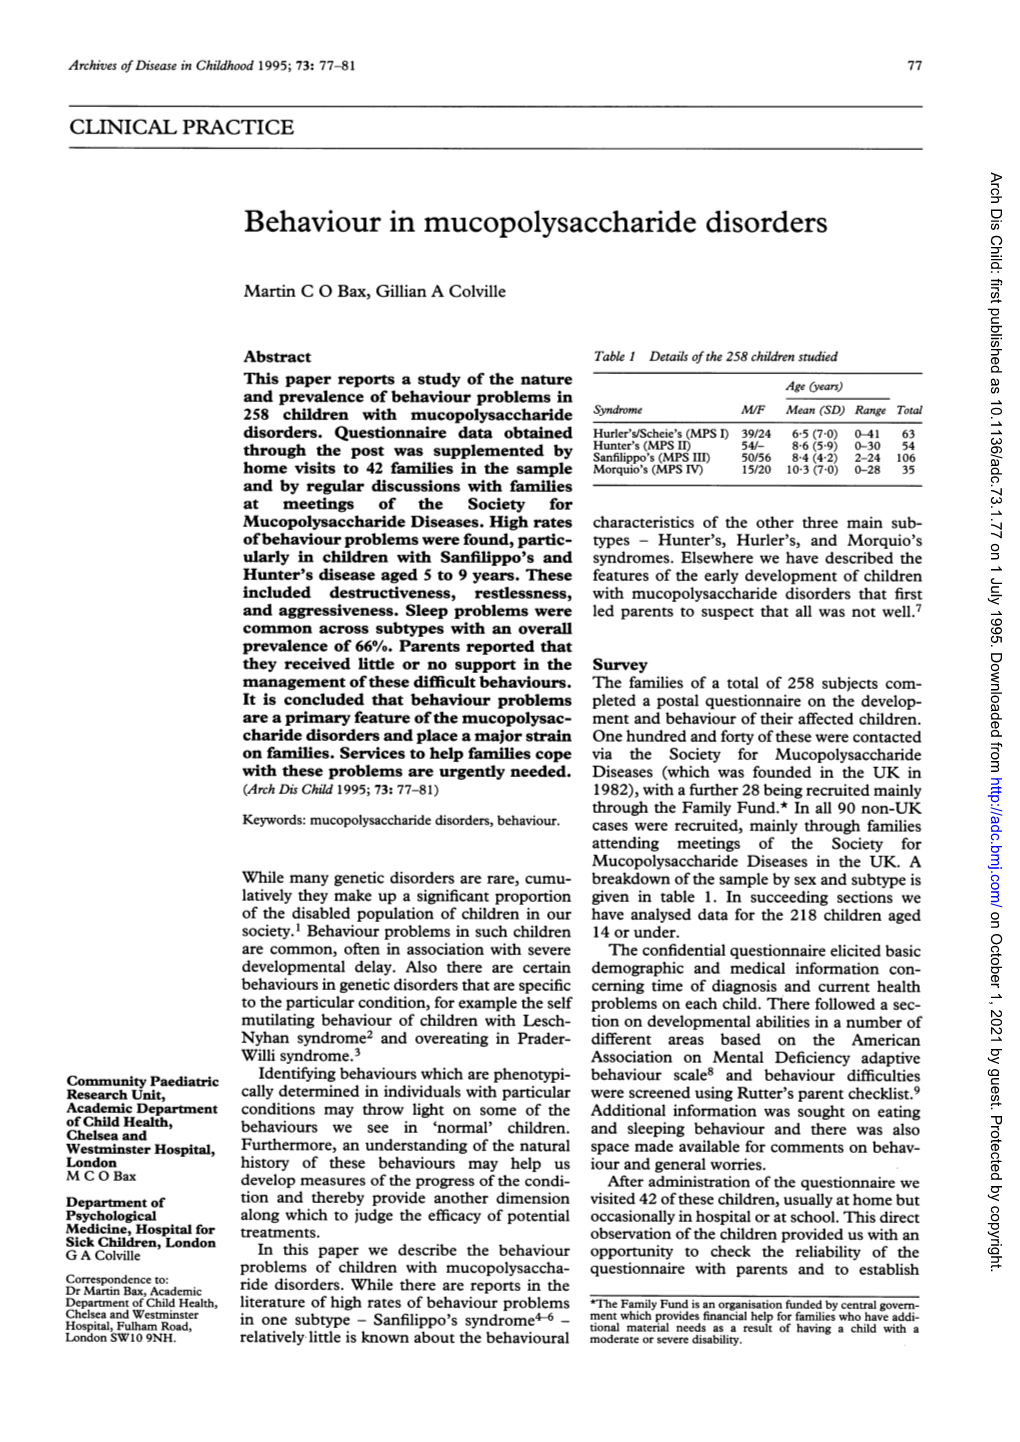 Behaviour in Mucopolysaccharide Disorders